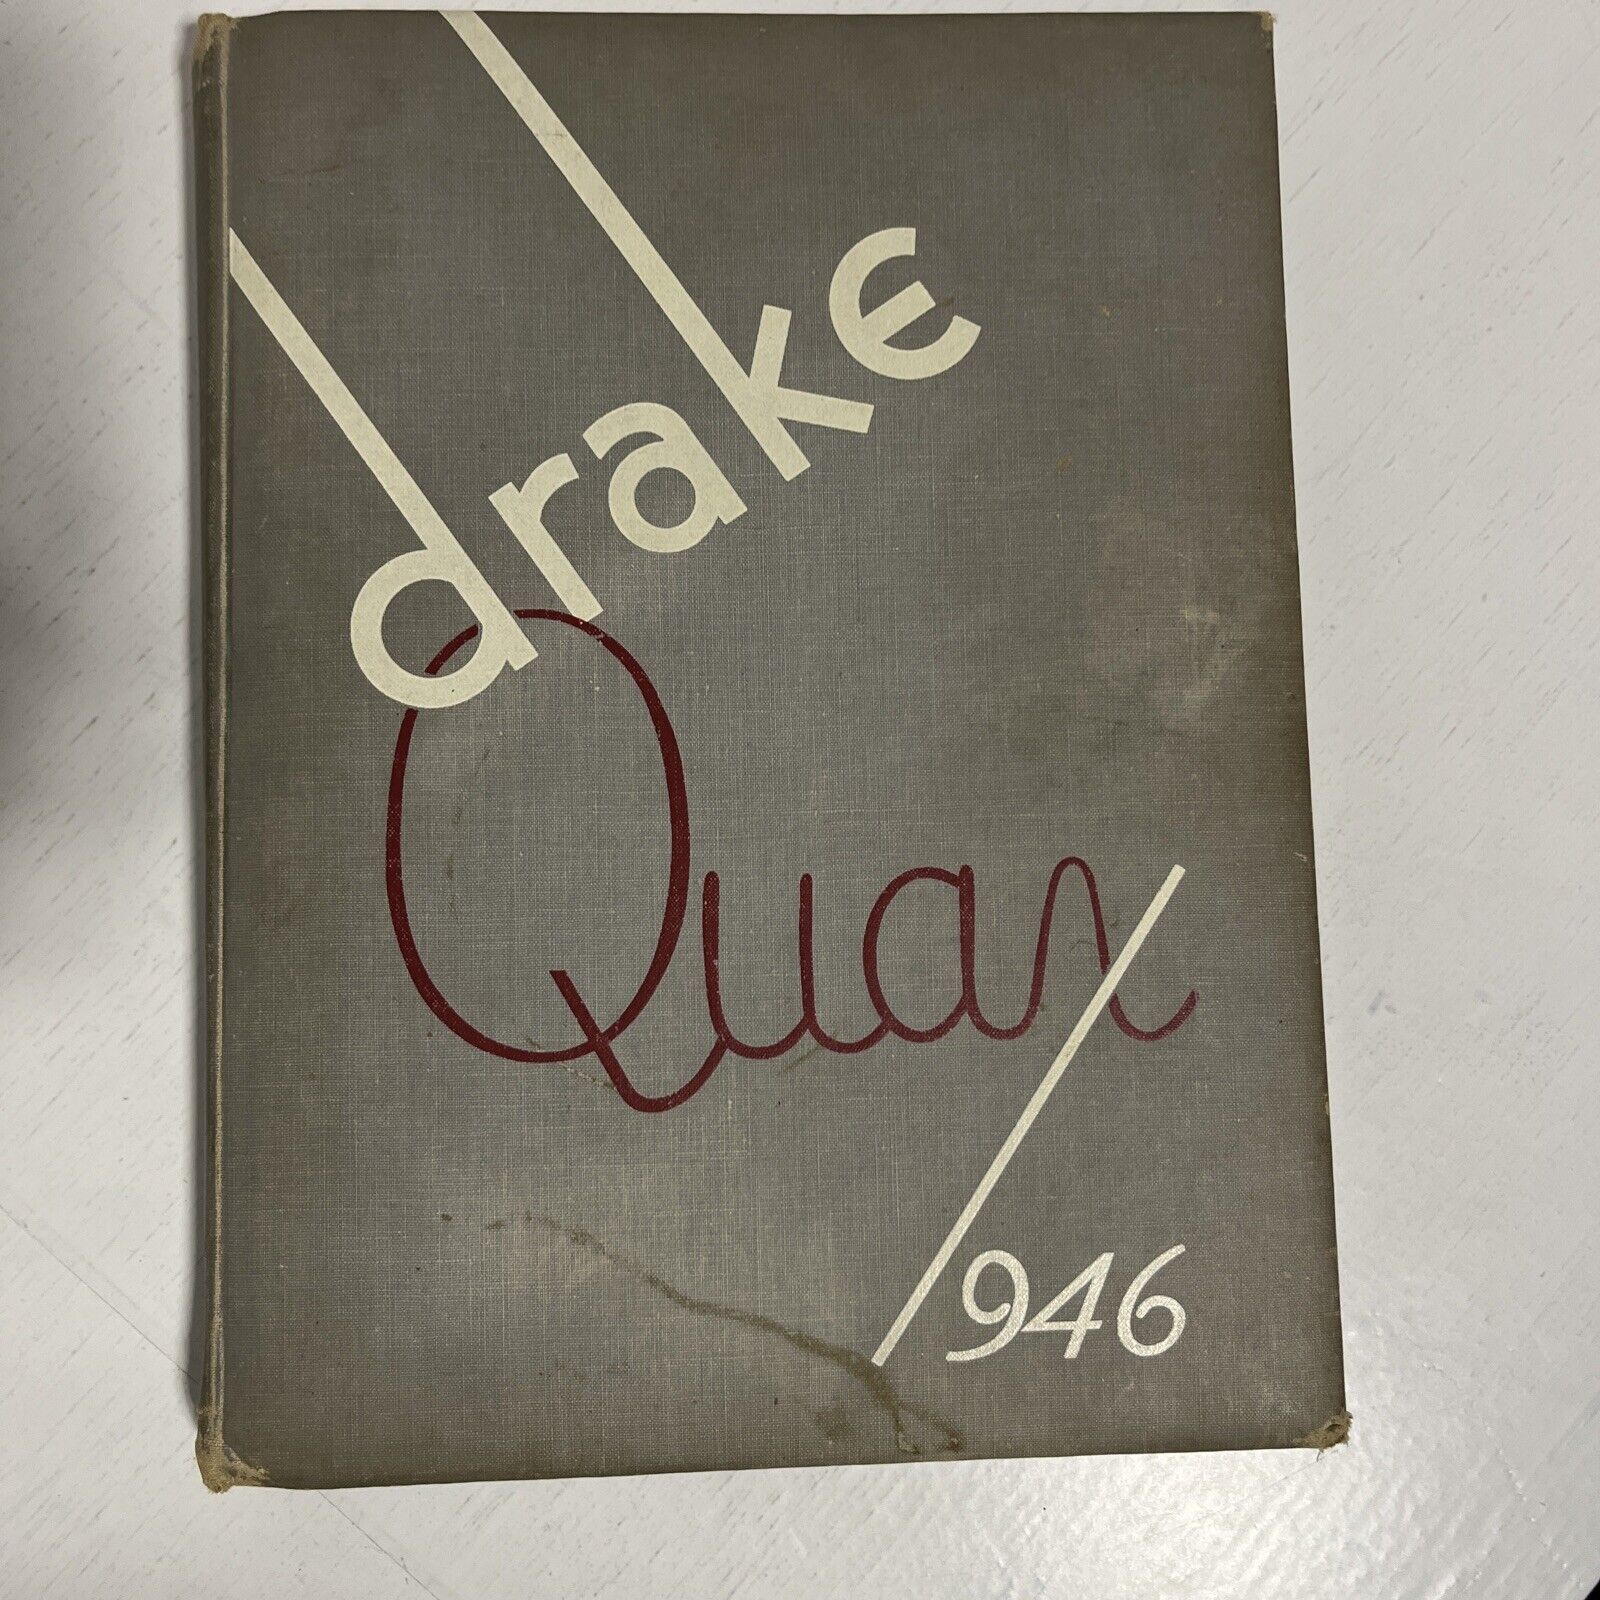 Quax 1946 Drake University Des Moines Iowa, Yearbook Vintage